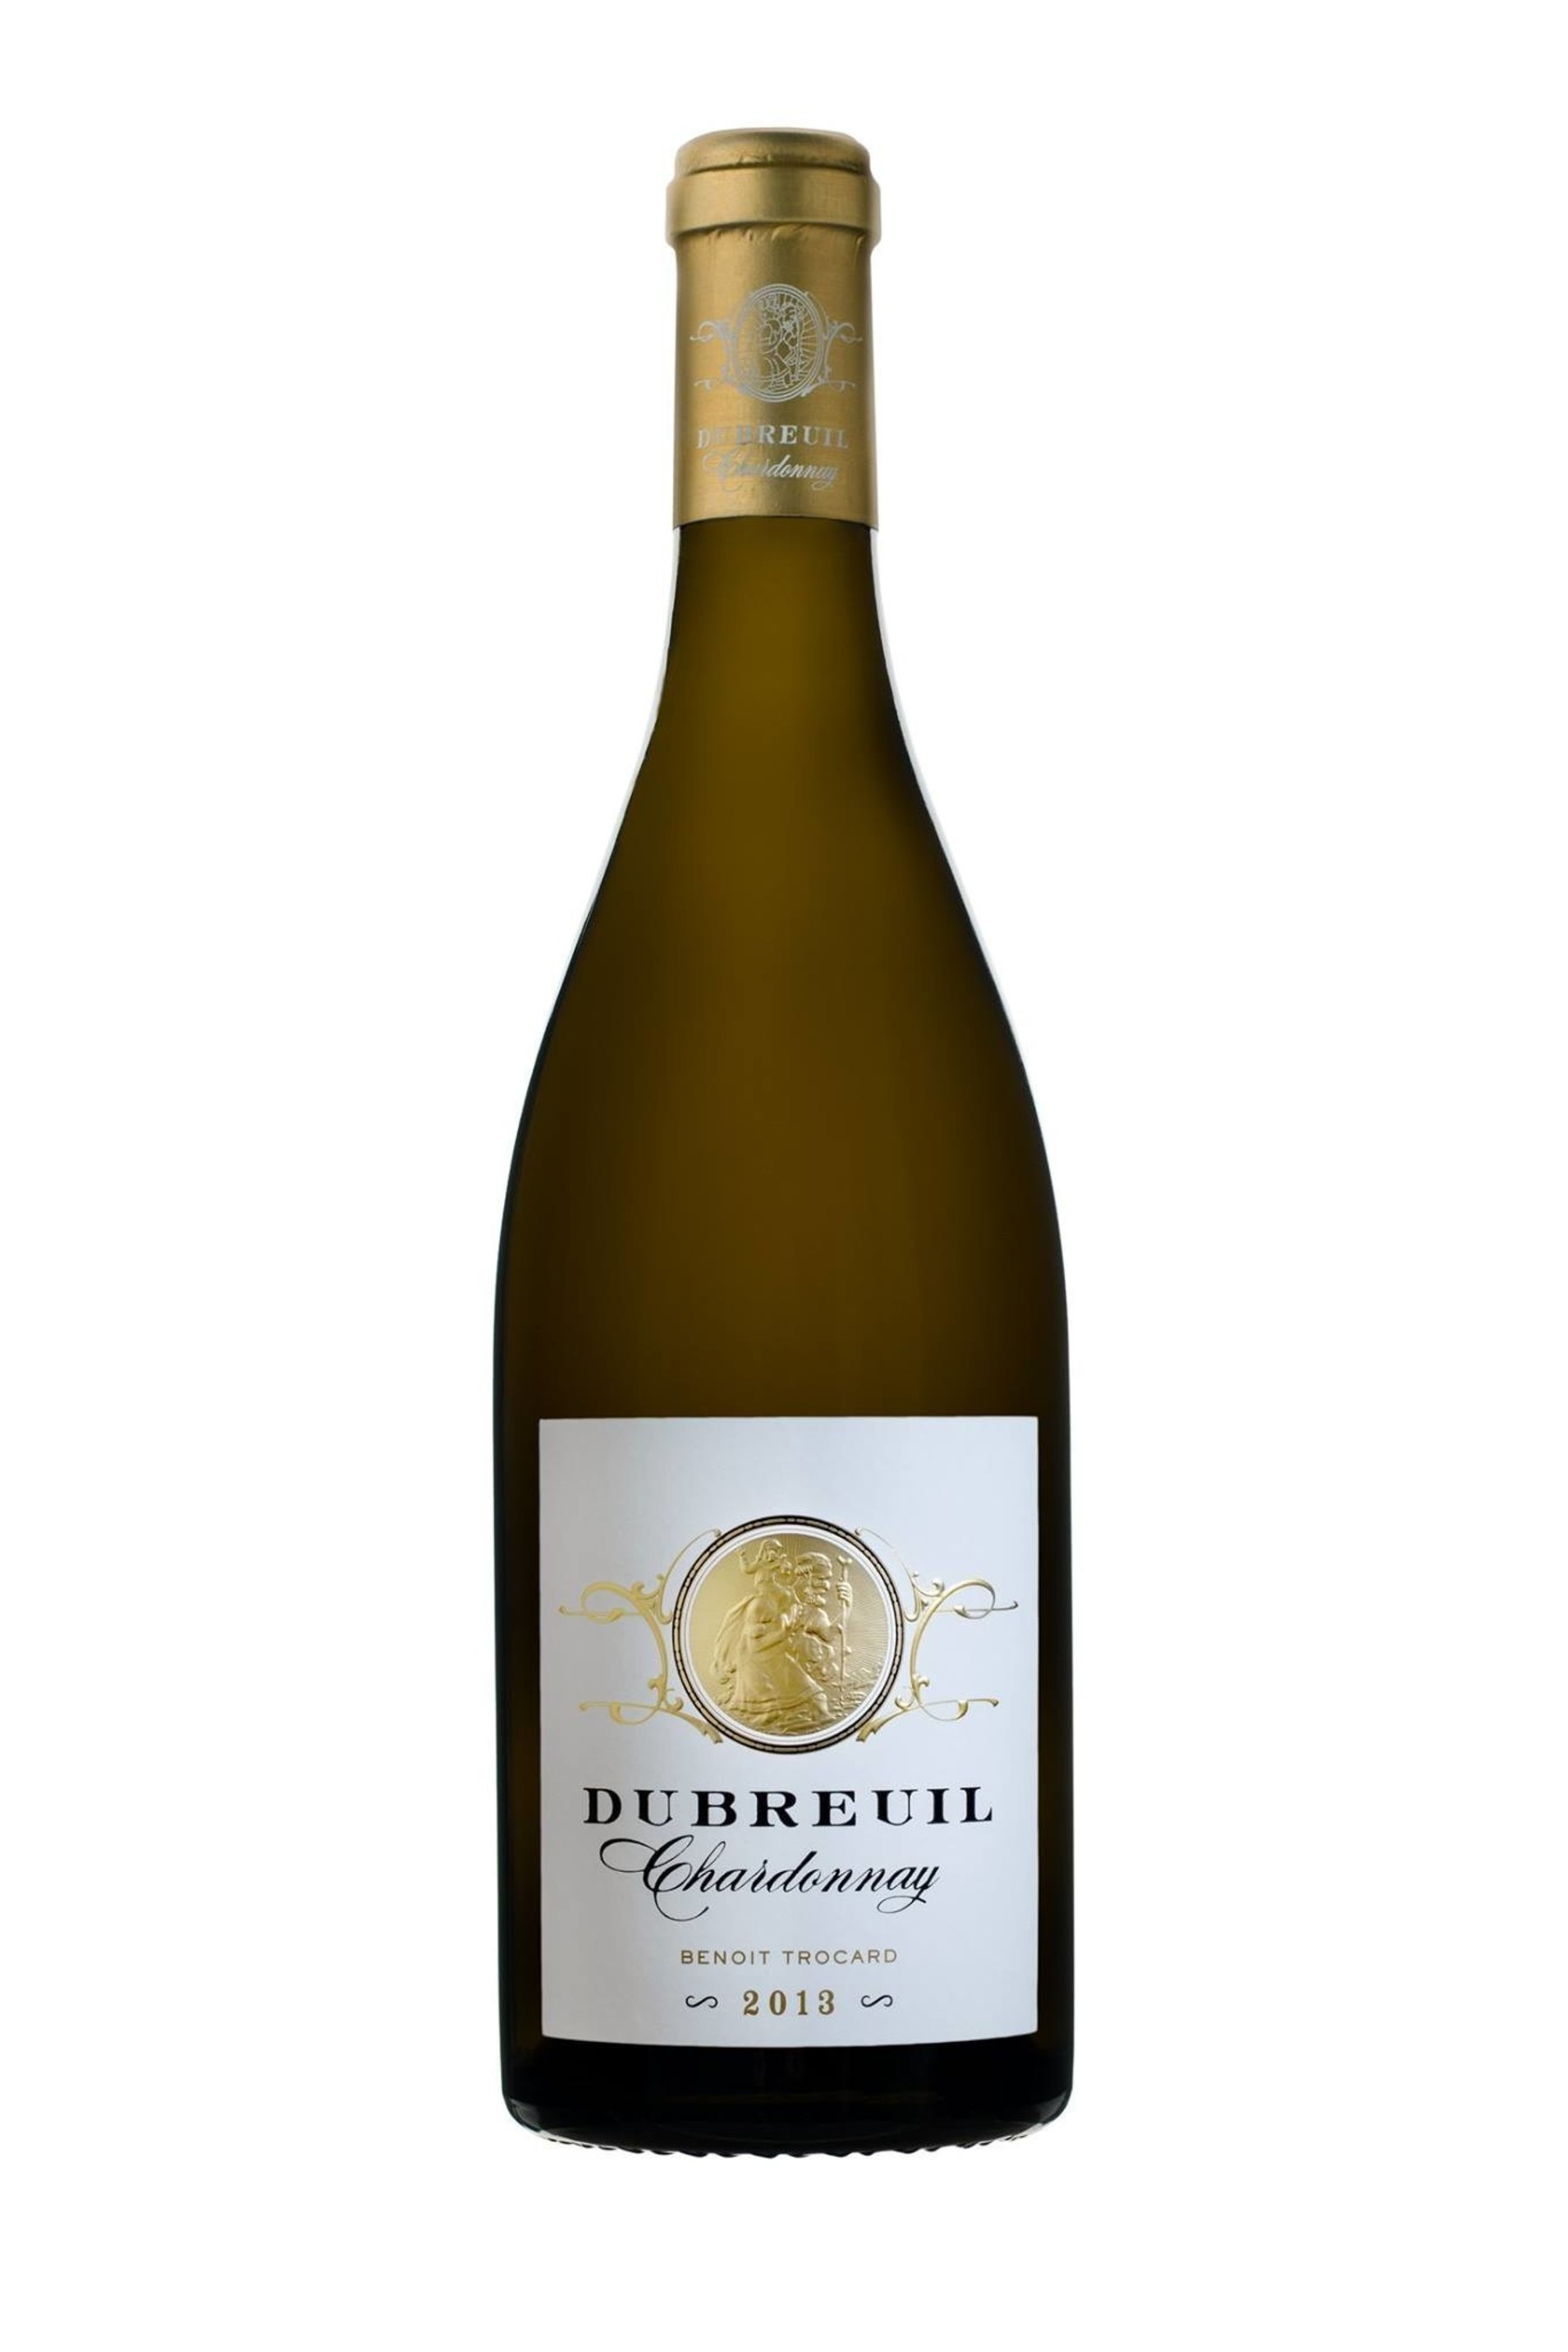 2013 Dubreuil Chardonnay by Winemaker Benoit Trocard